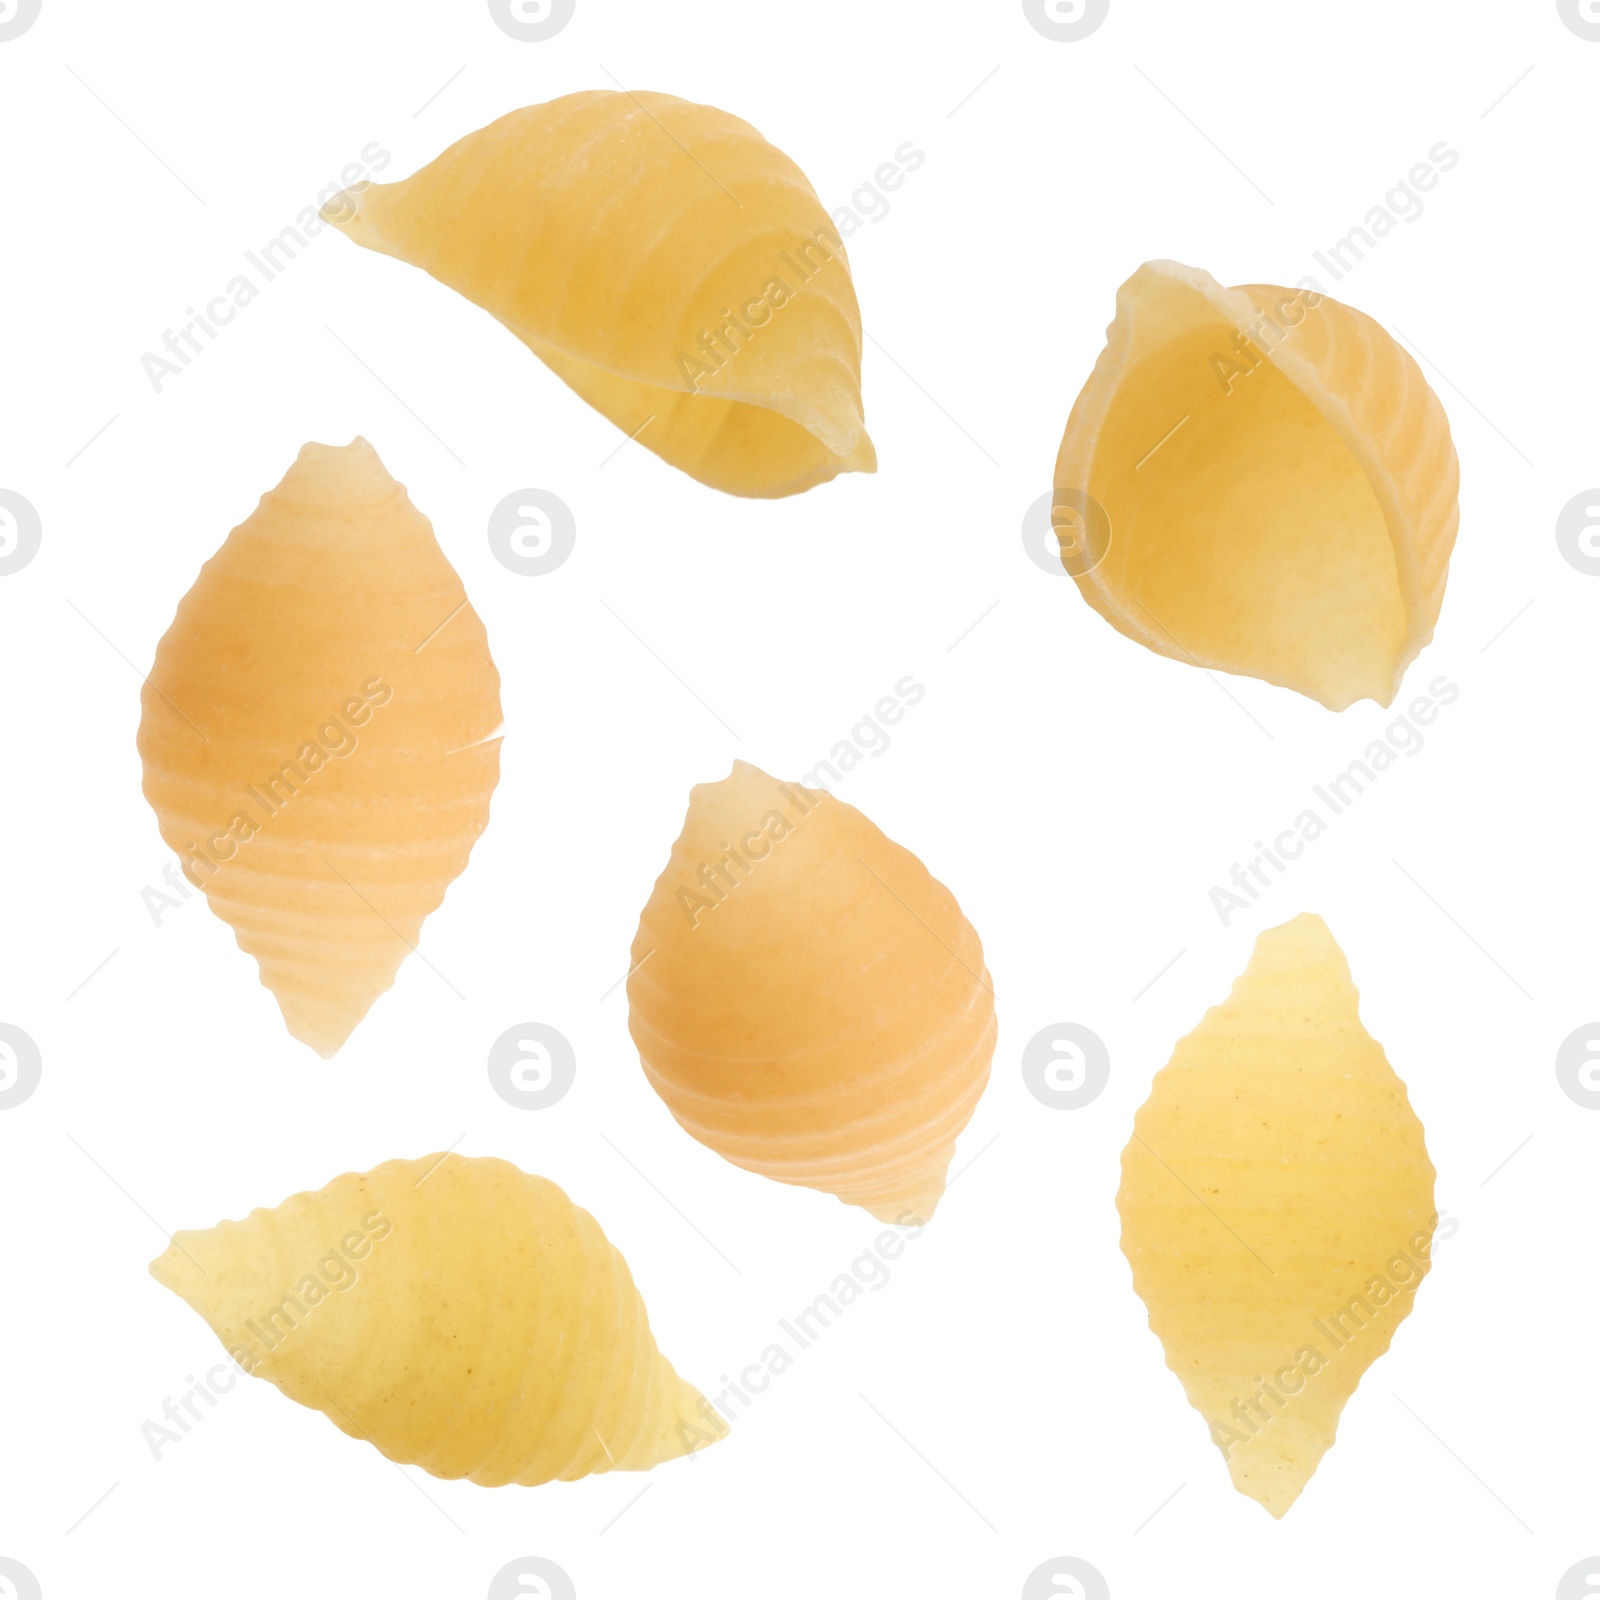 Image of Raw conchiglie pasta isolated on white, set